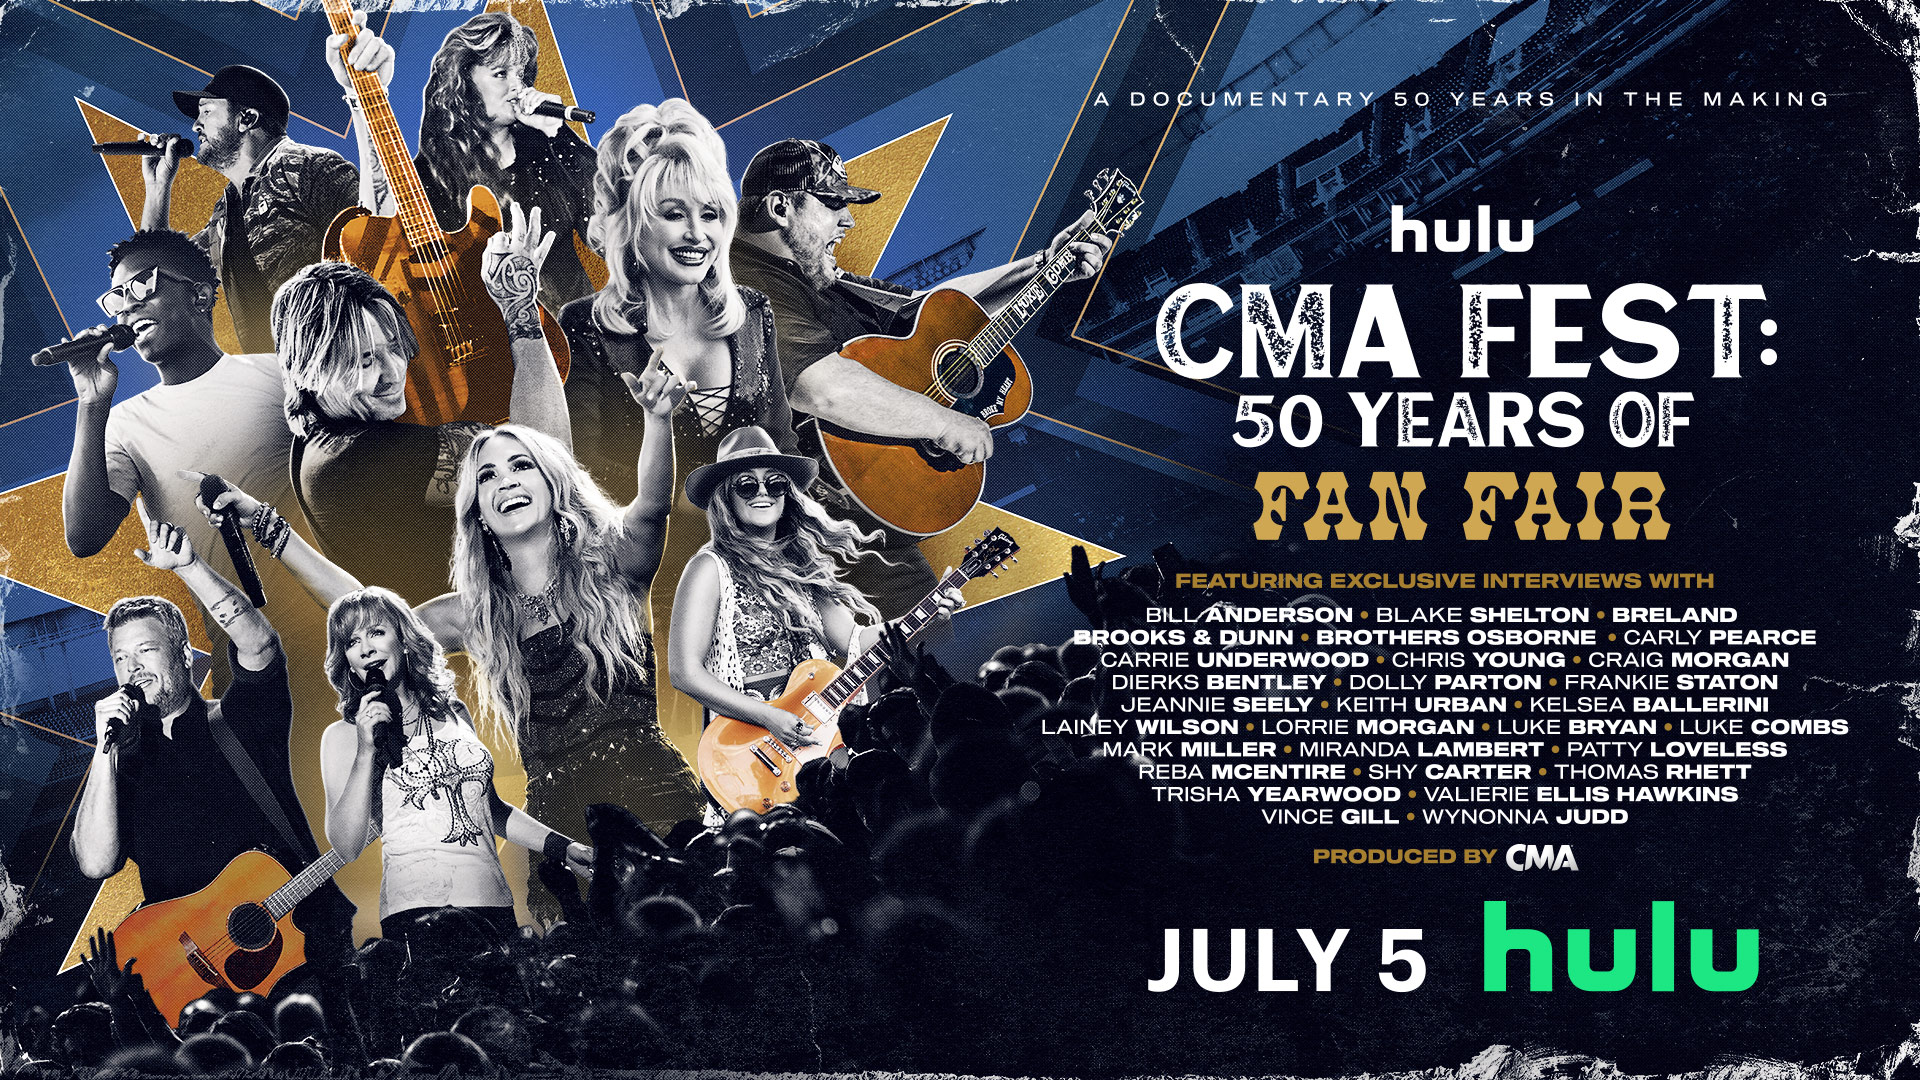 CMA Fest Documentary "50 Years of Fan Fair" to Premiere on Hulu